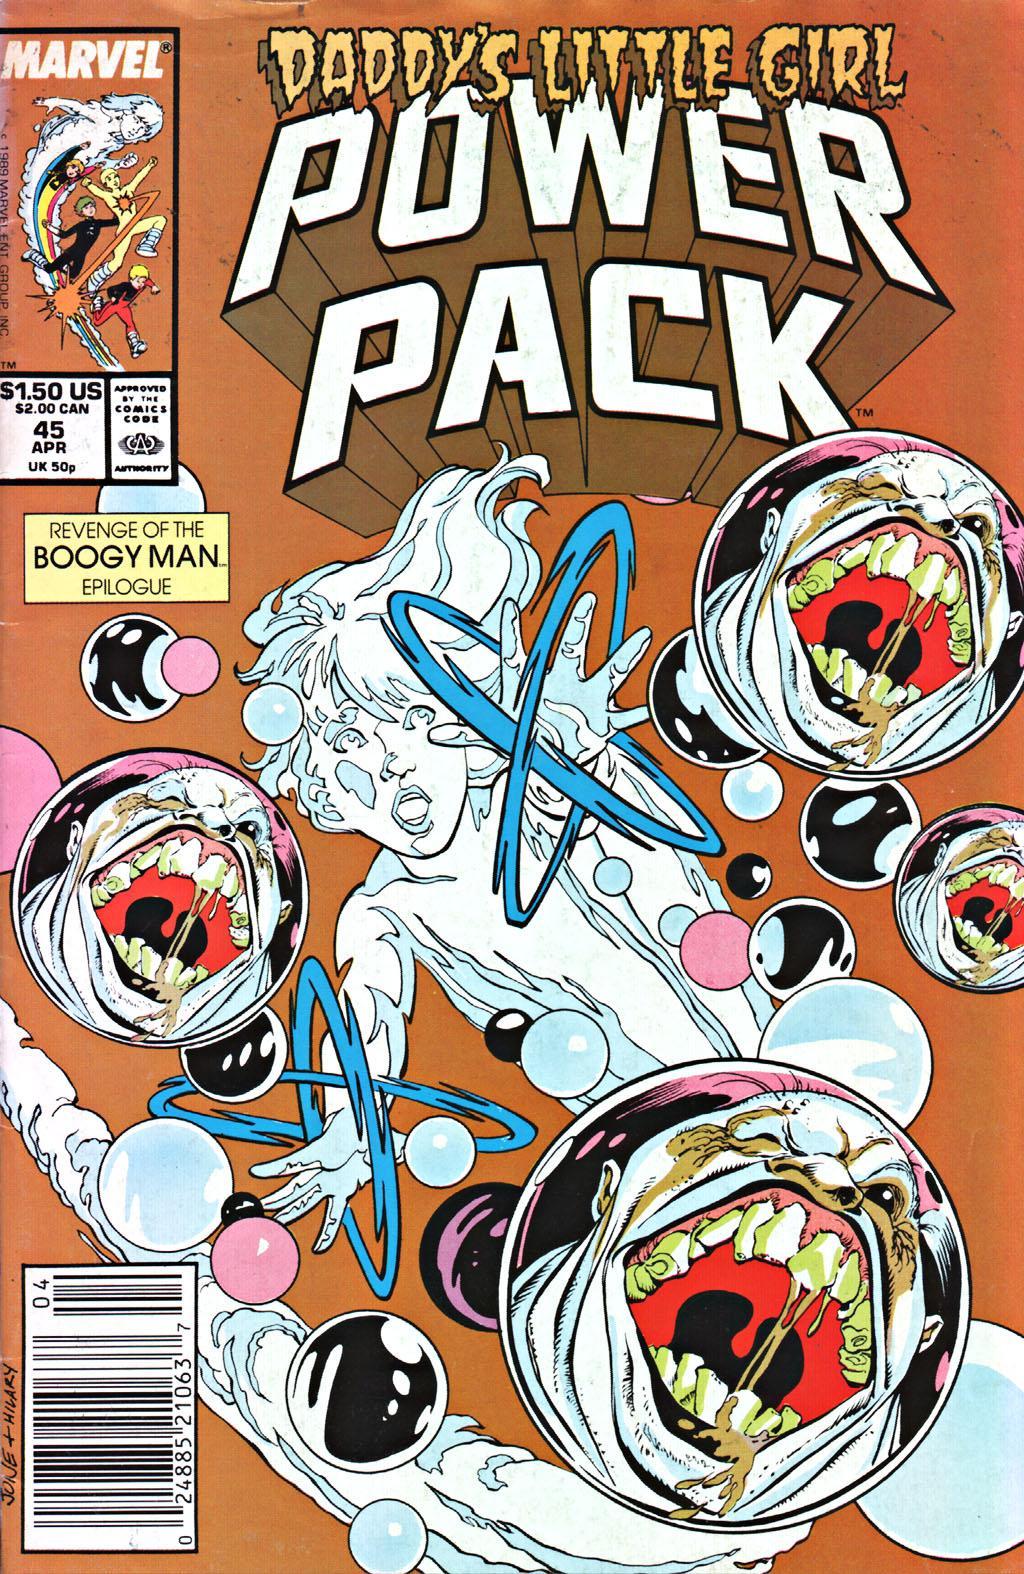 Power packing комиксы. POWERPACK комиксы. Бесконечная месть Марвел. Energy Pack комикс. More food more Power Comics read.